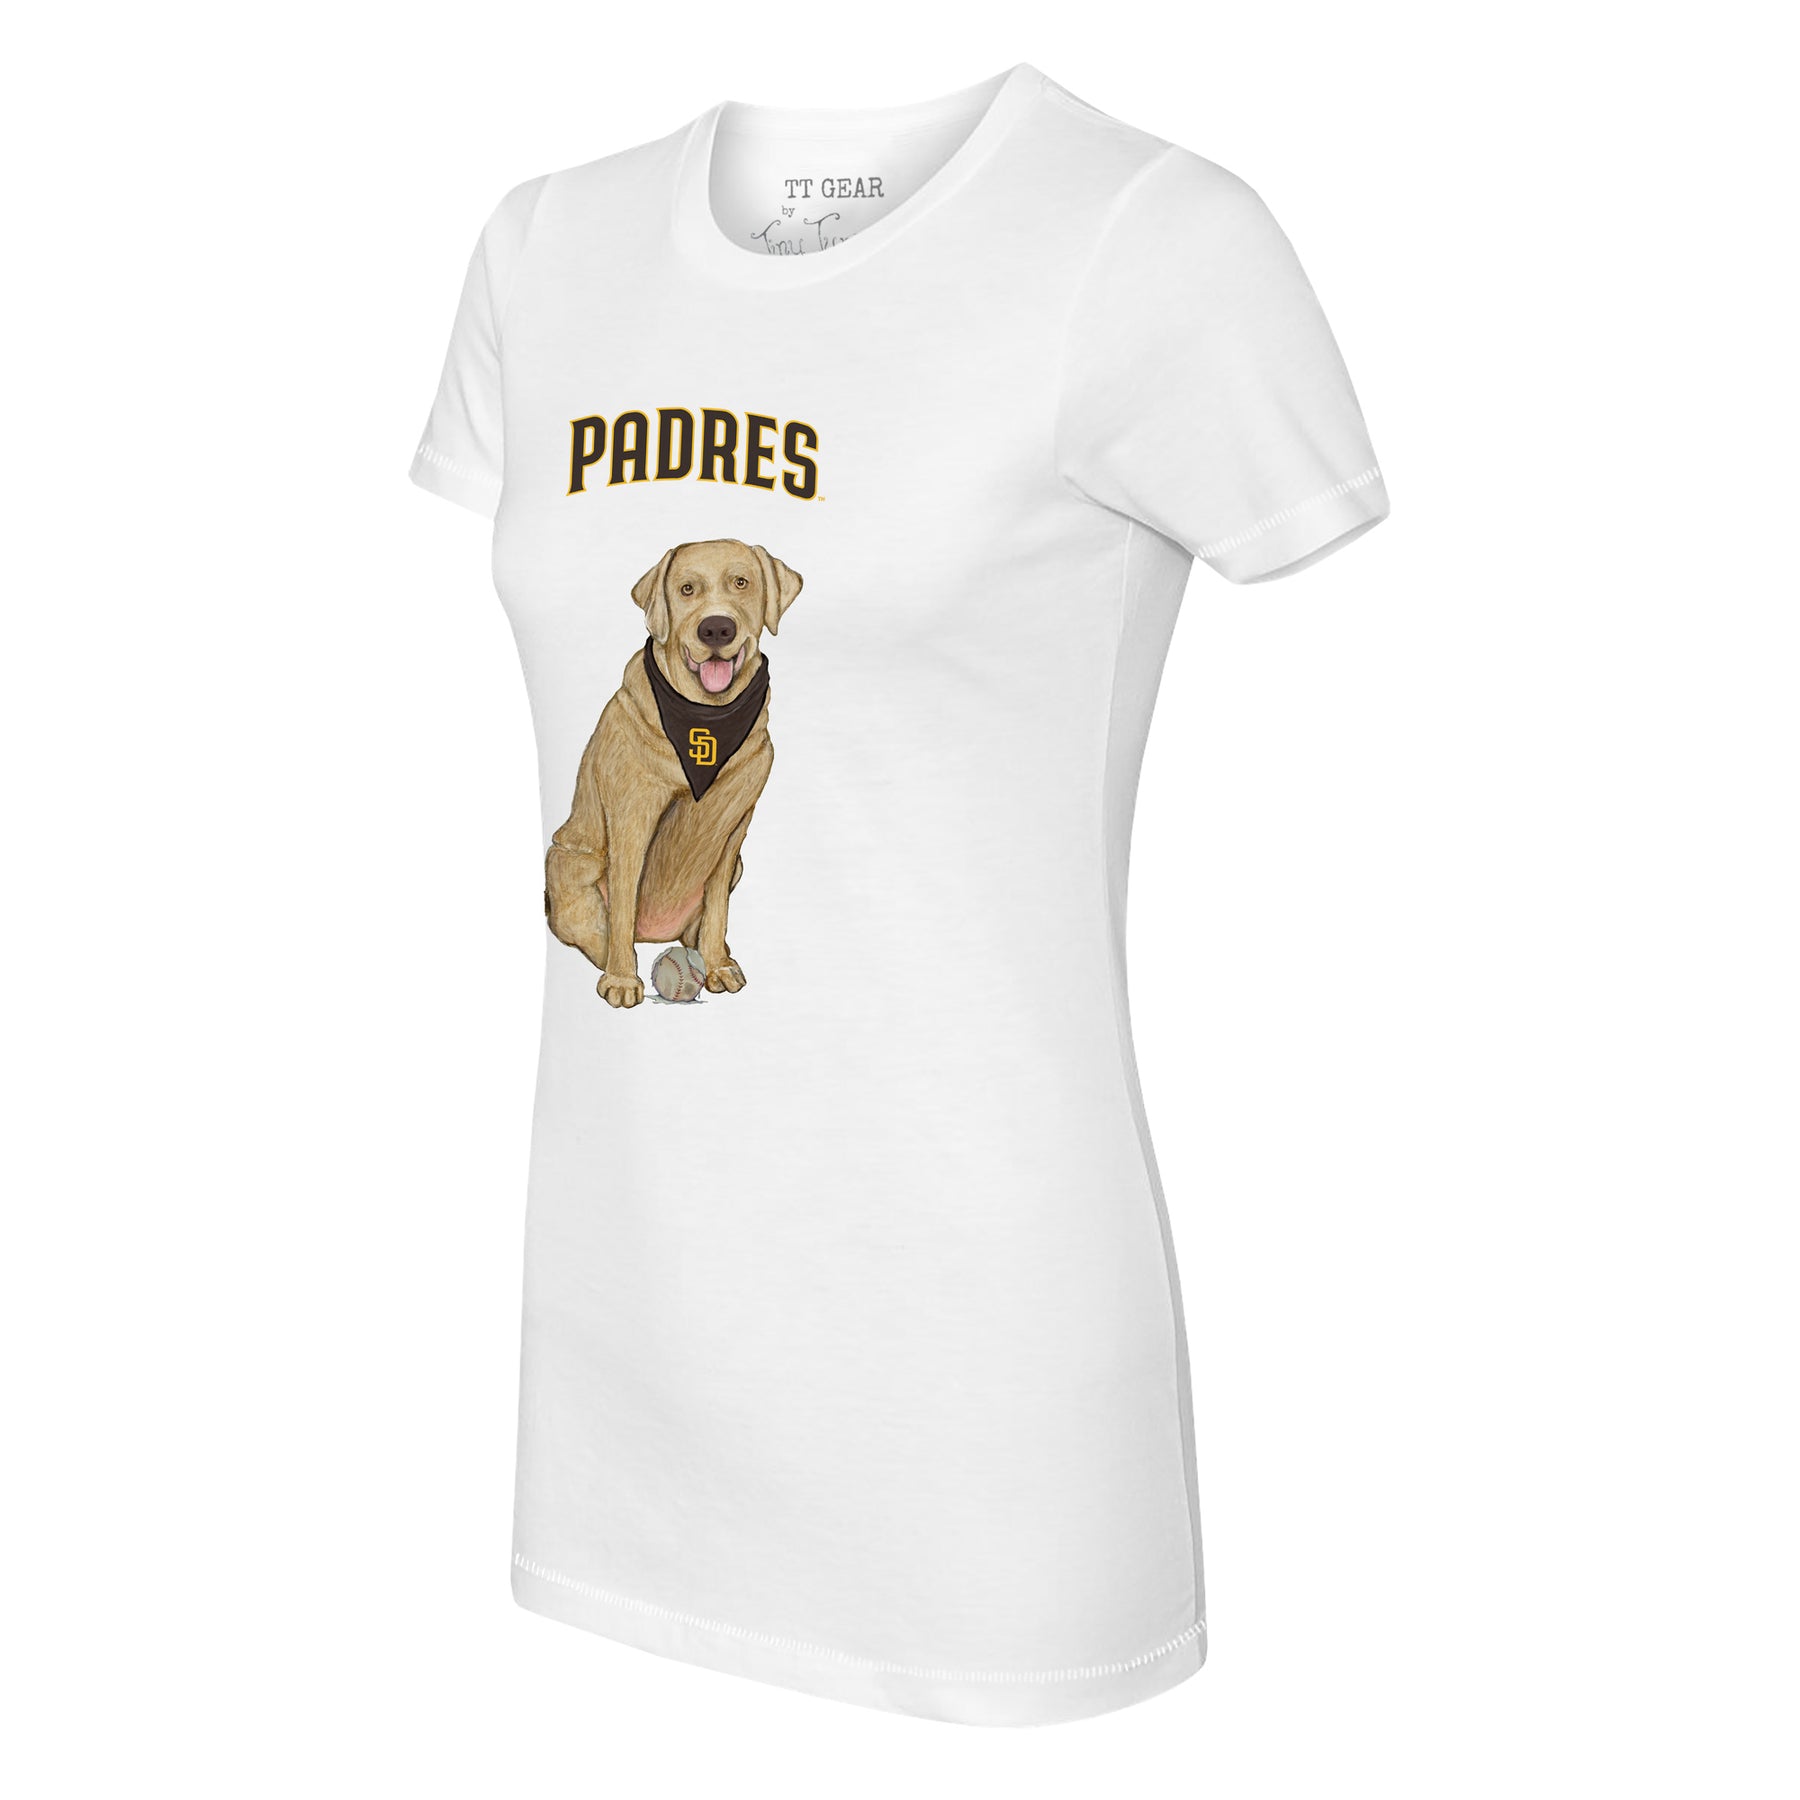 San Diego Padres Yellow Labrador Retriever Tee Shirt